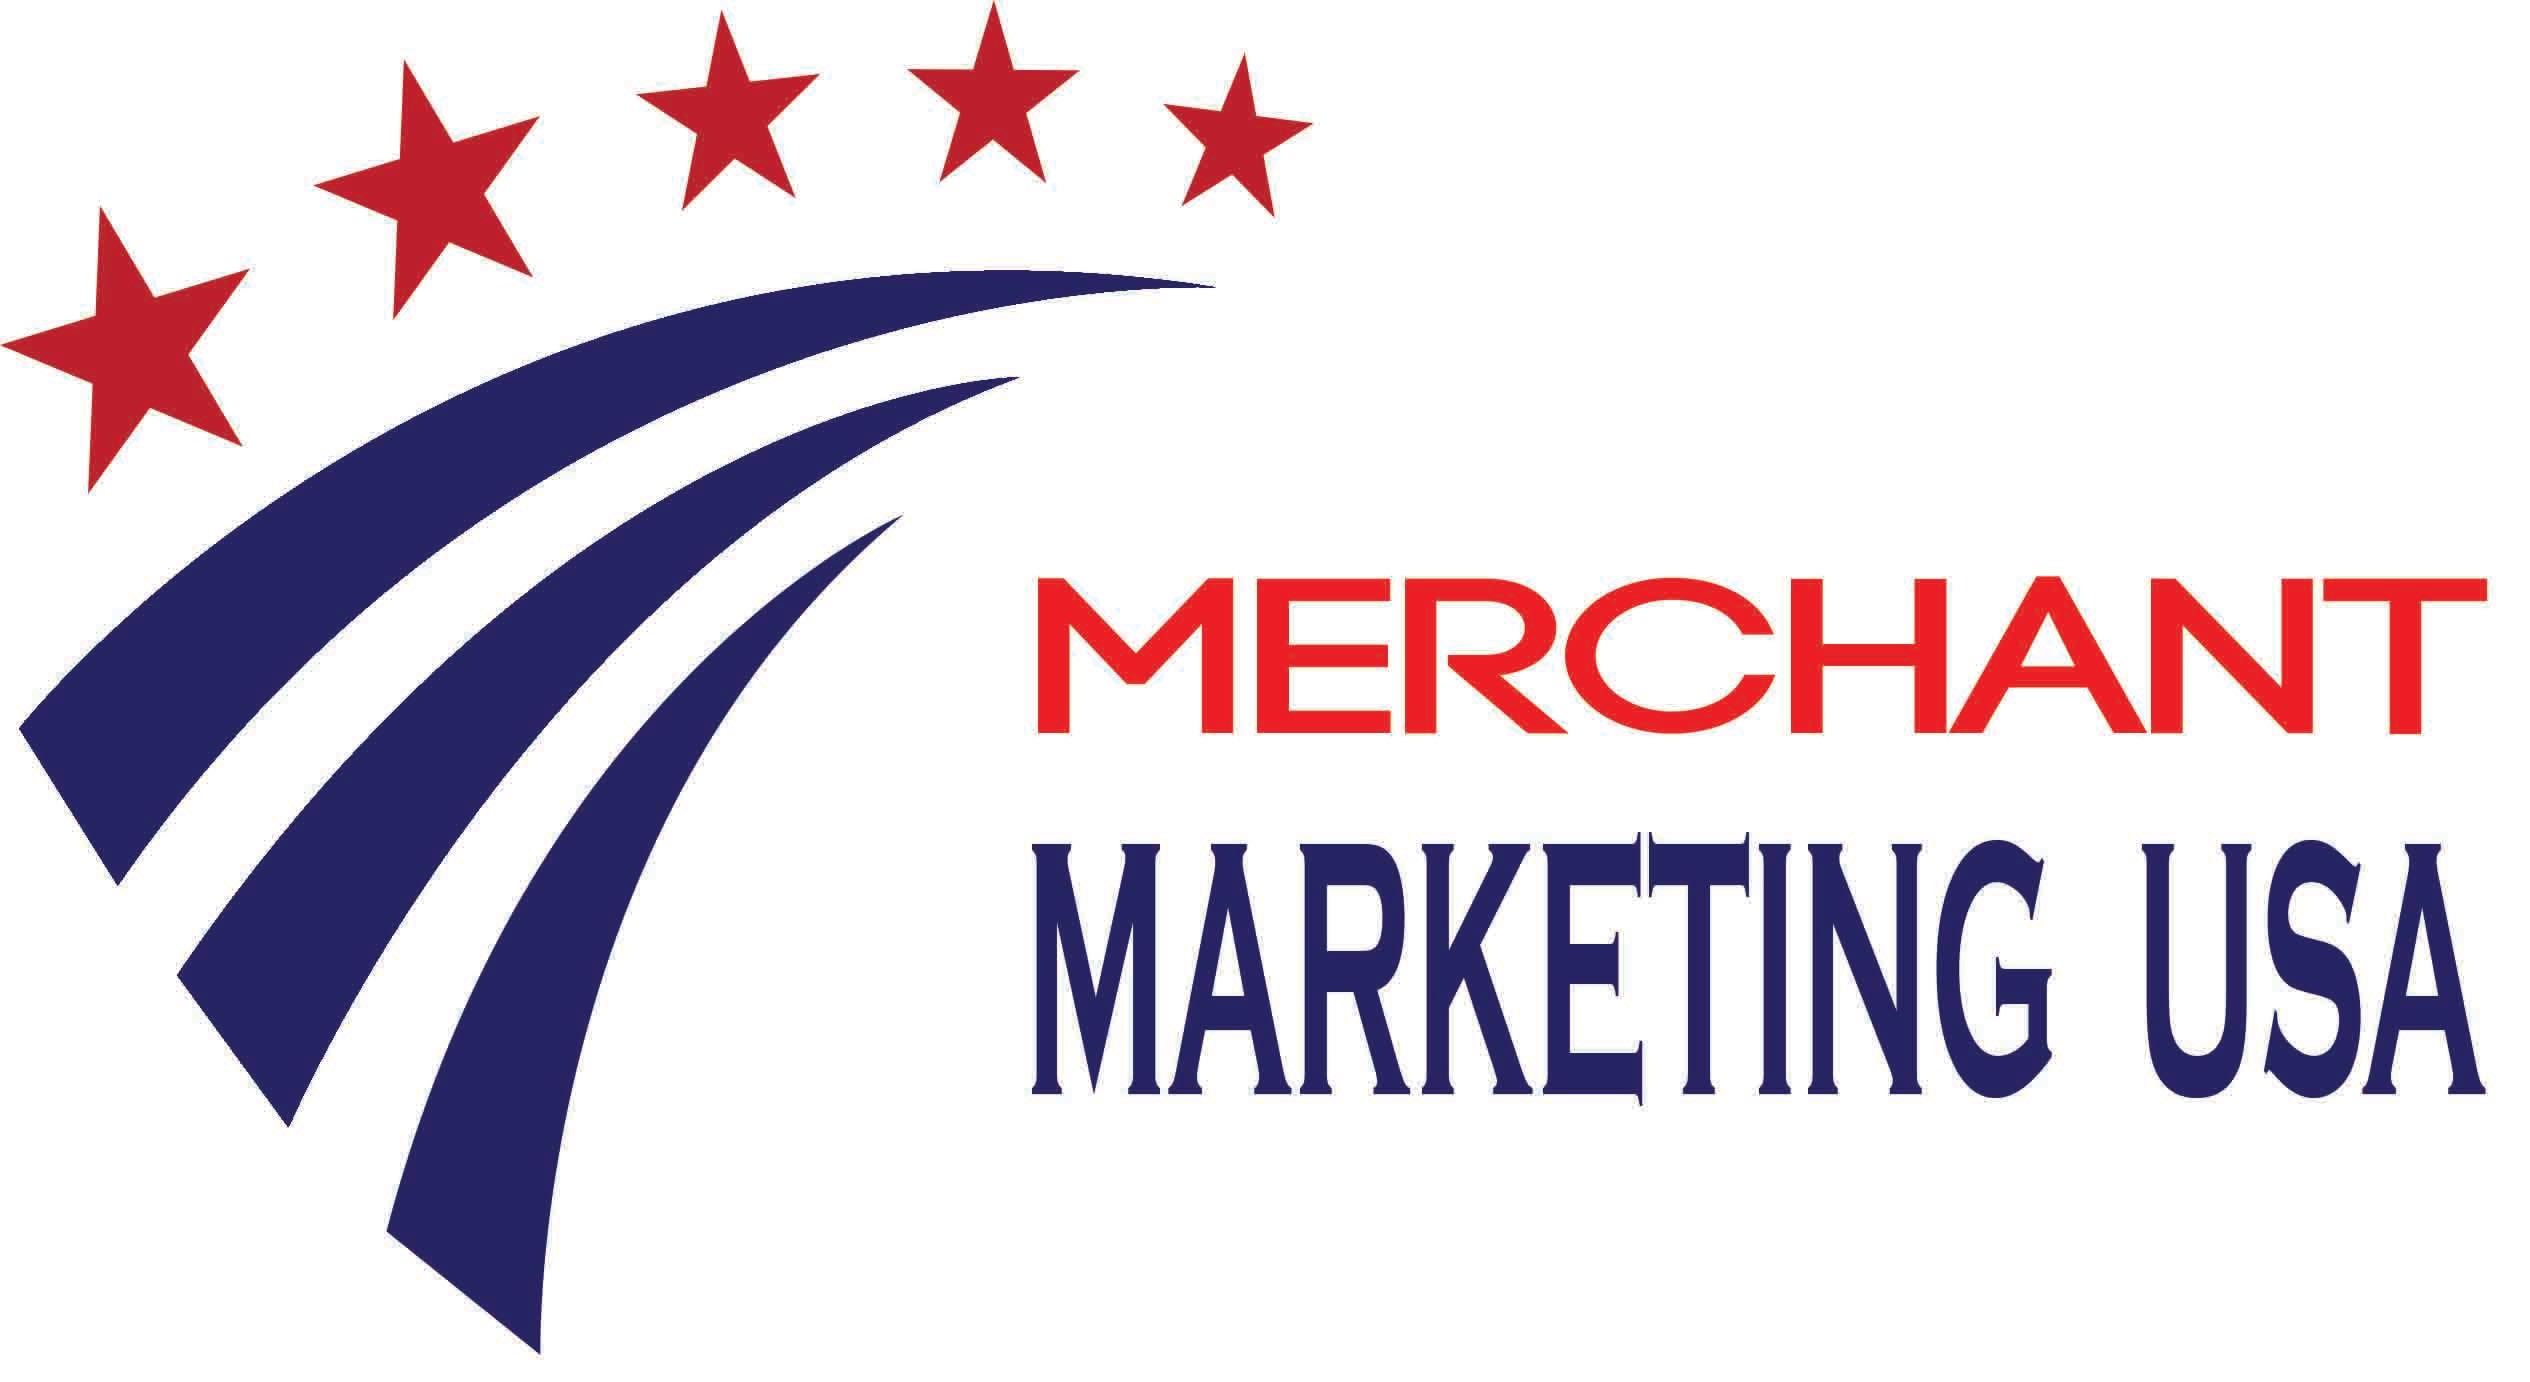 Merchant Marketing USA